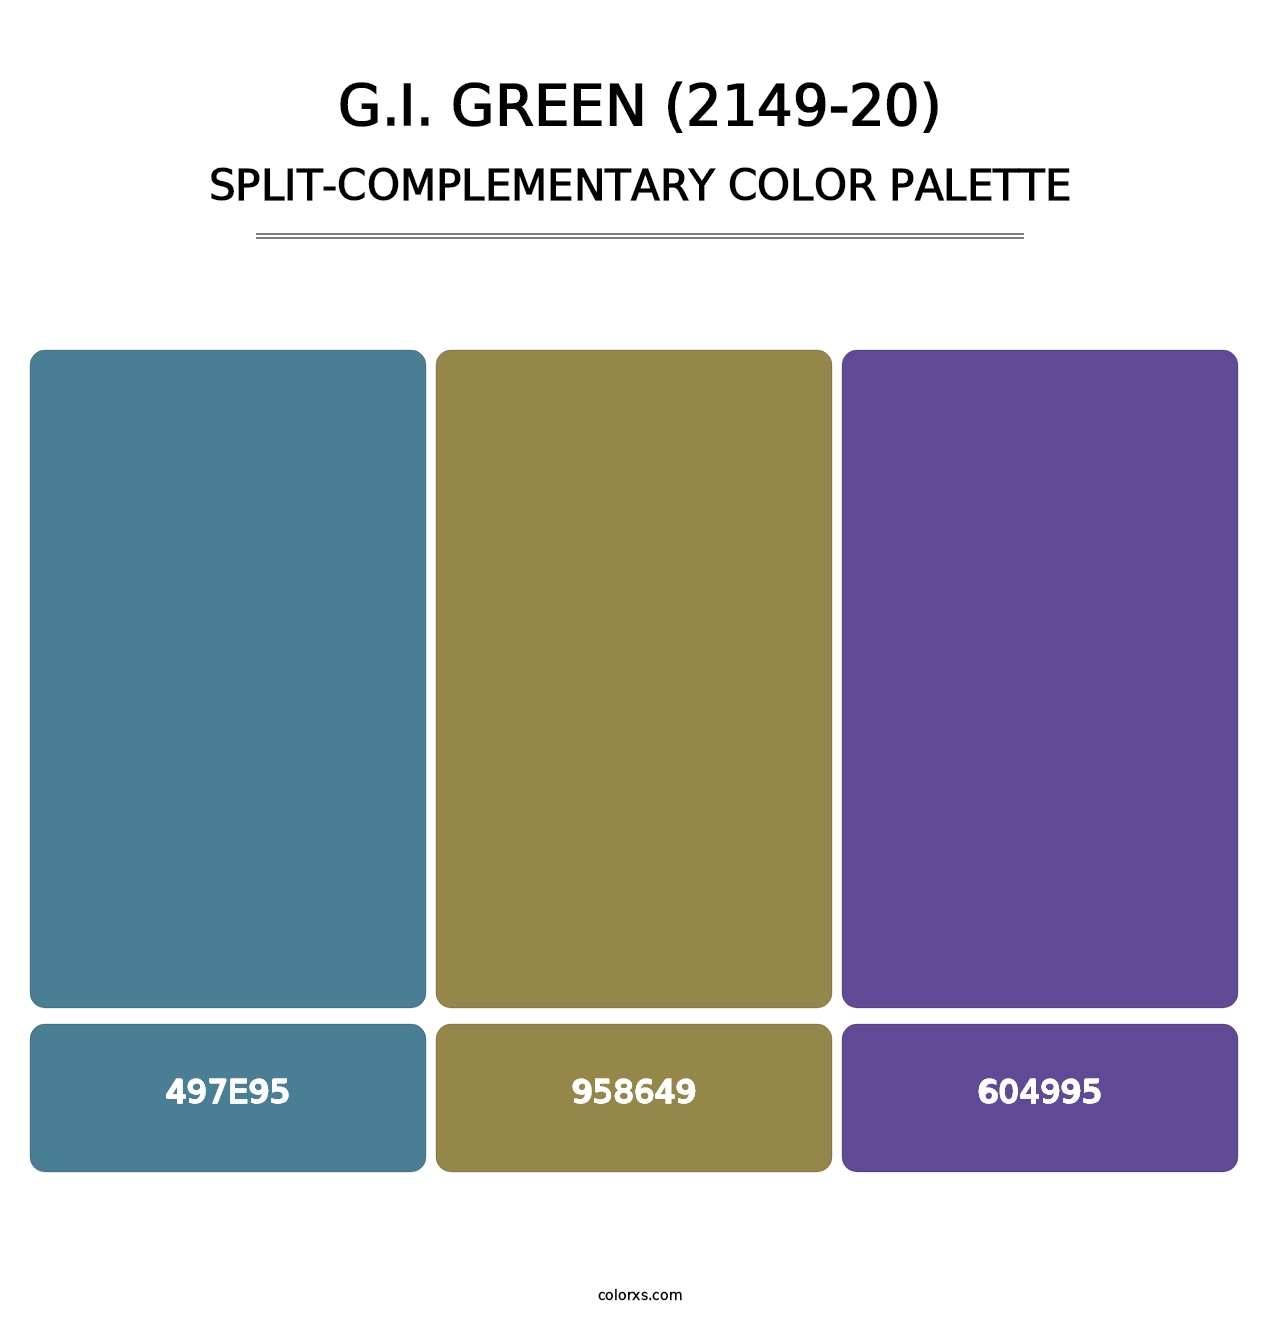 G.I. Green (2149-20) - Split-Complementary Color Palette